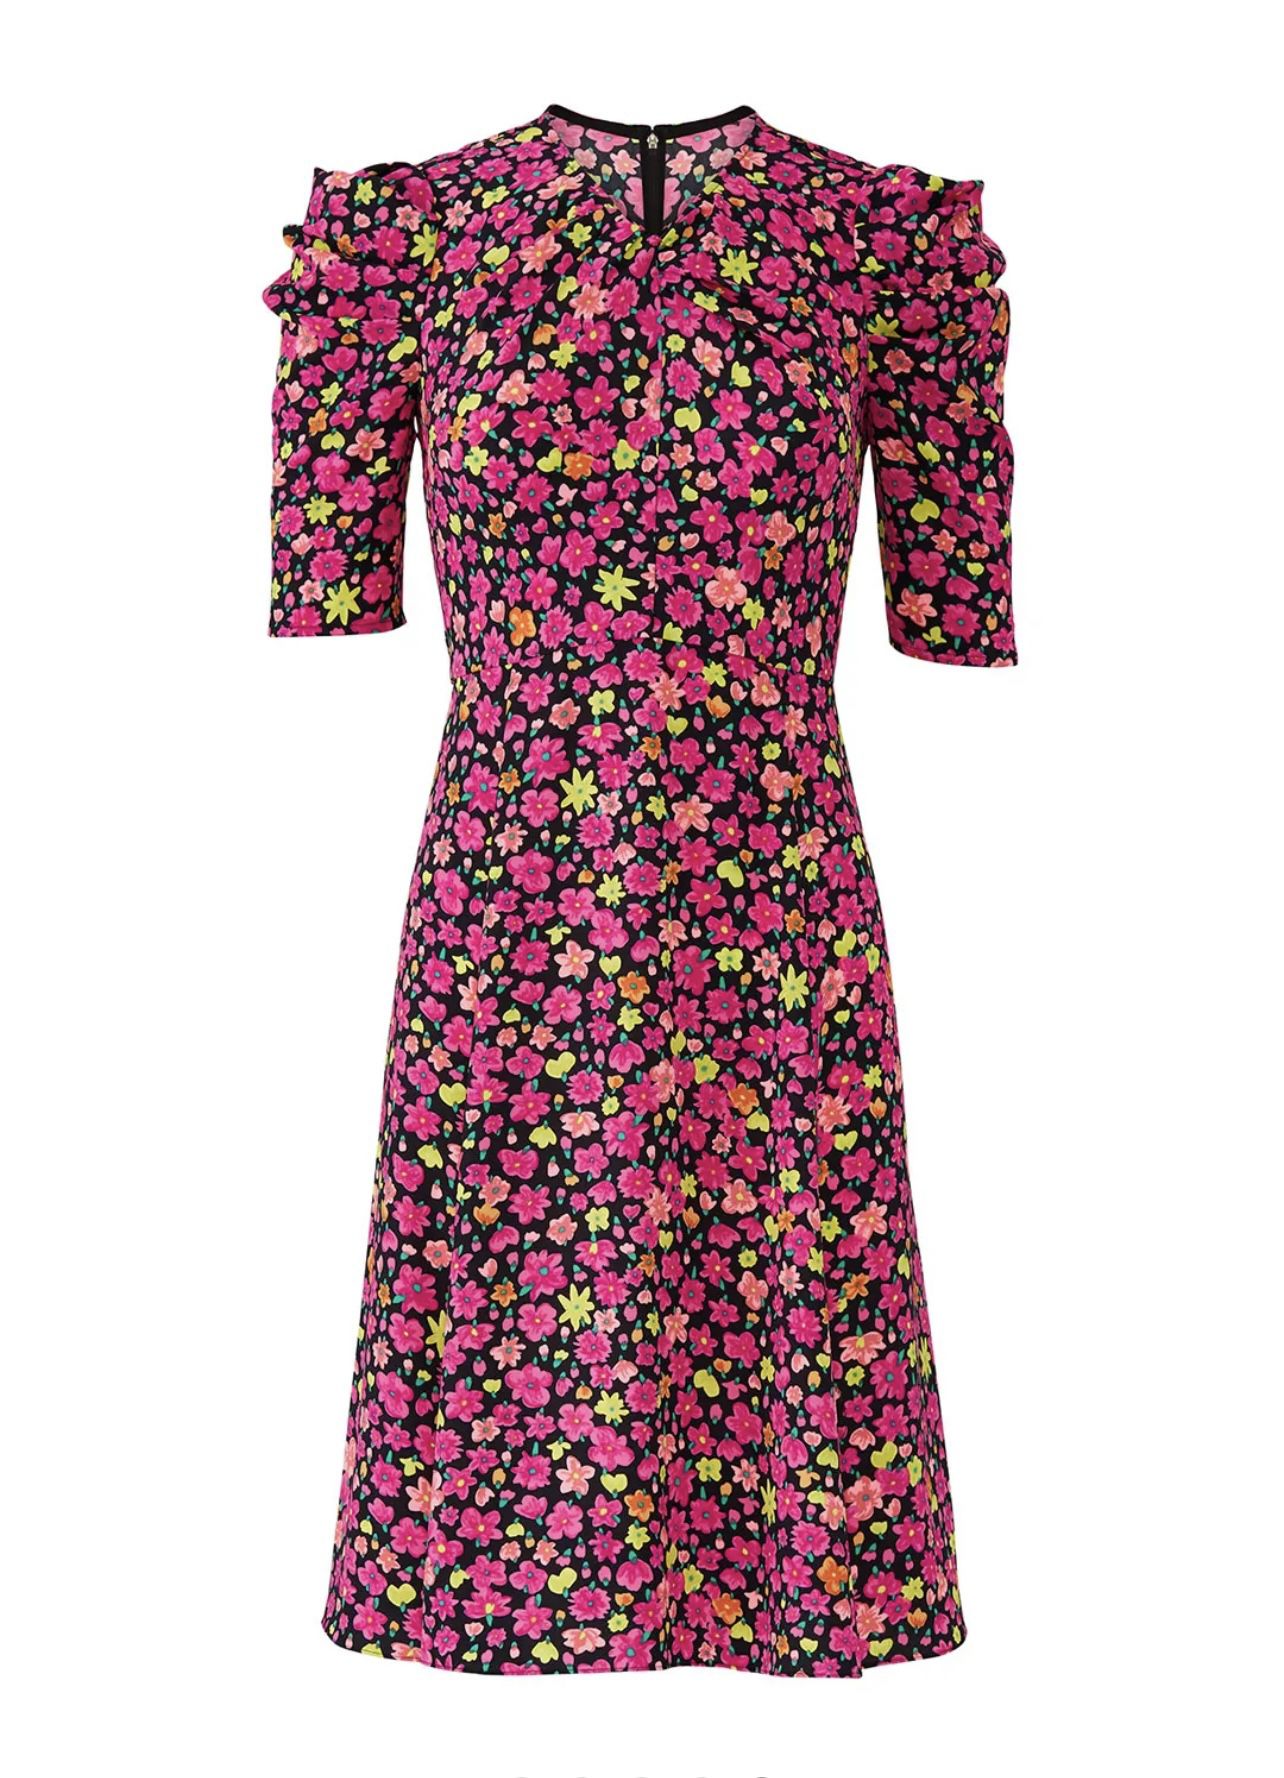 NWT KATE SPADE Marker Floral A-line Dress, size 6/M